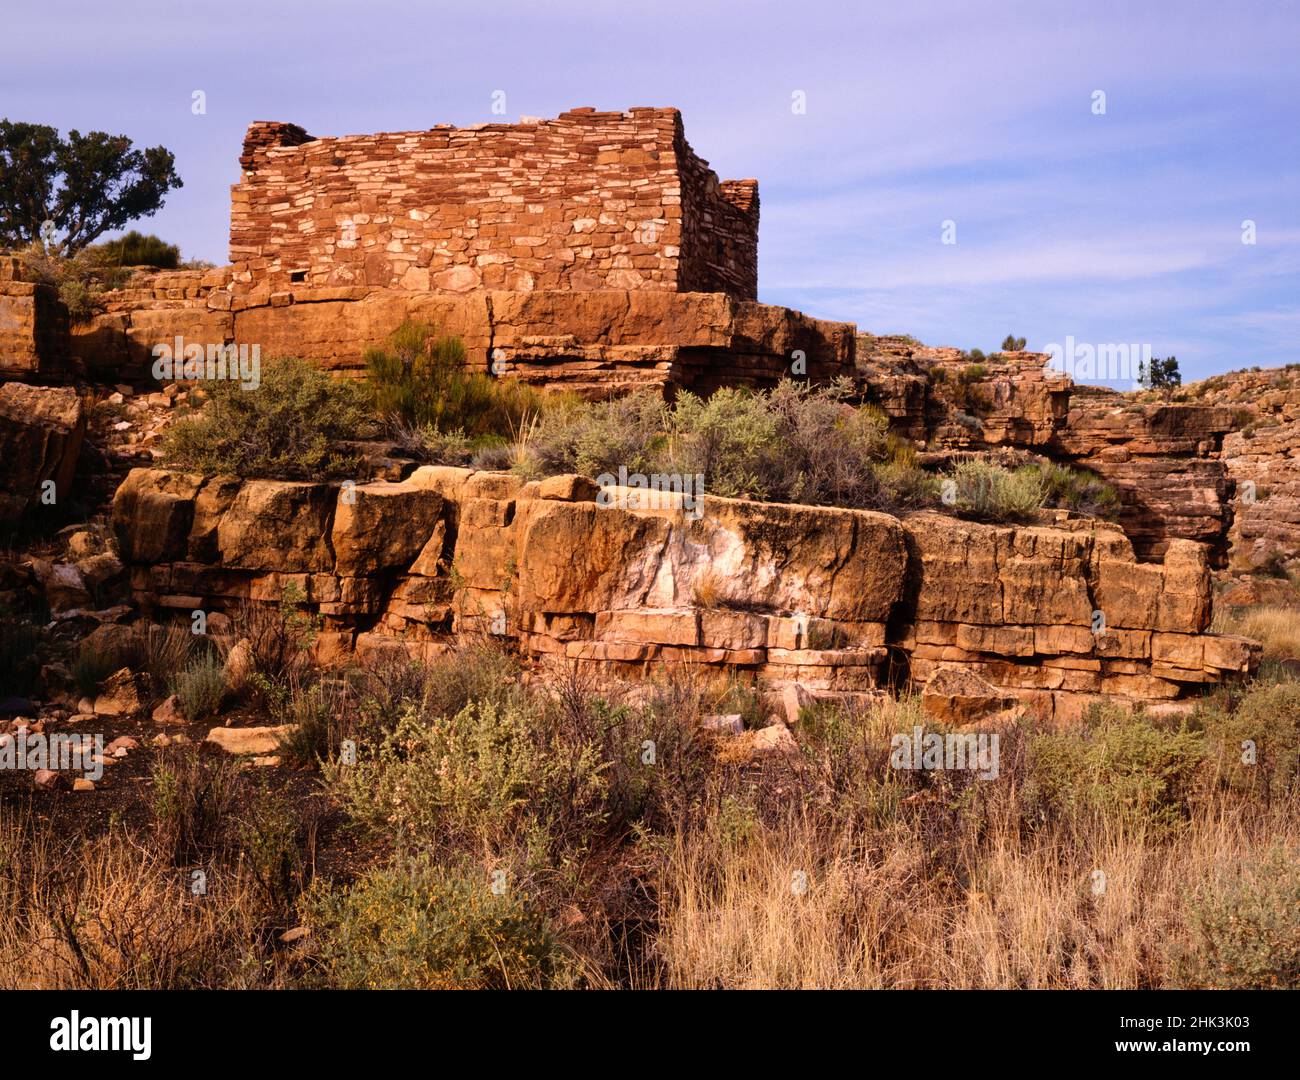 USA, Arizona, Wupatki National Monument. Anasazi Indian Ruins in Box Canyon. Kredit als: Dennis Flaherty / Jaynes Gallery / DanitaDelimont.com Stockfoto